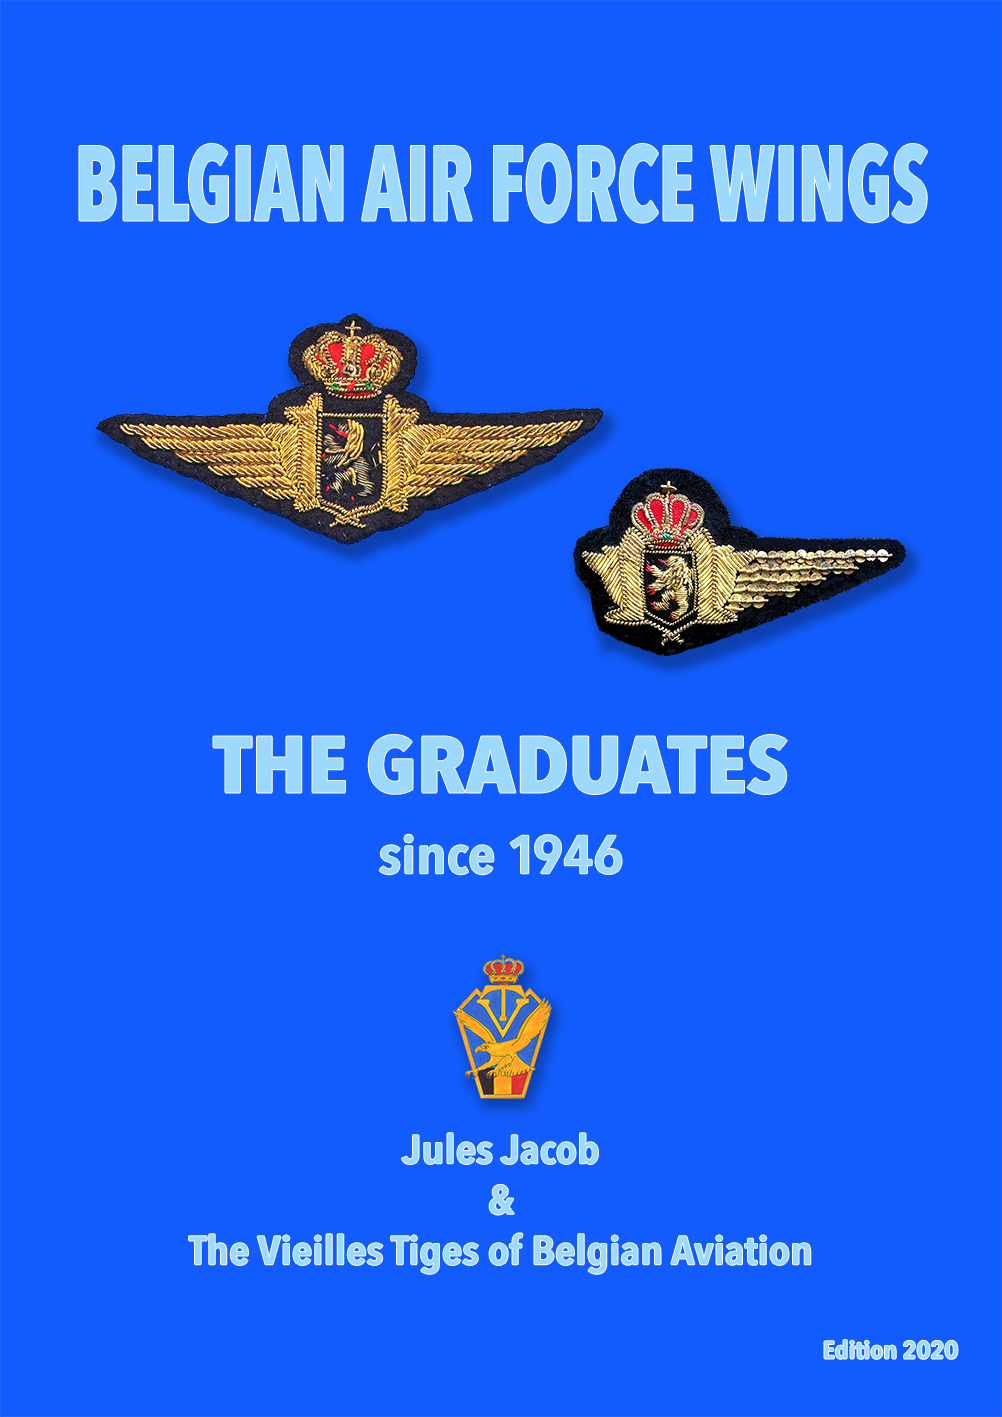 BAF Wings The Graduates since 1946